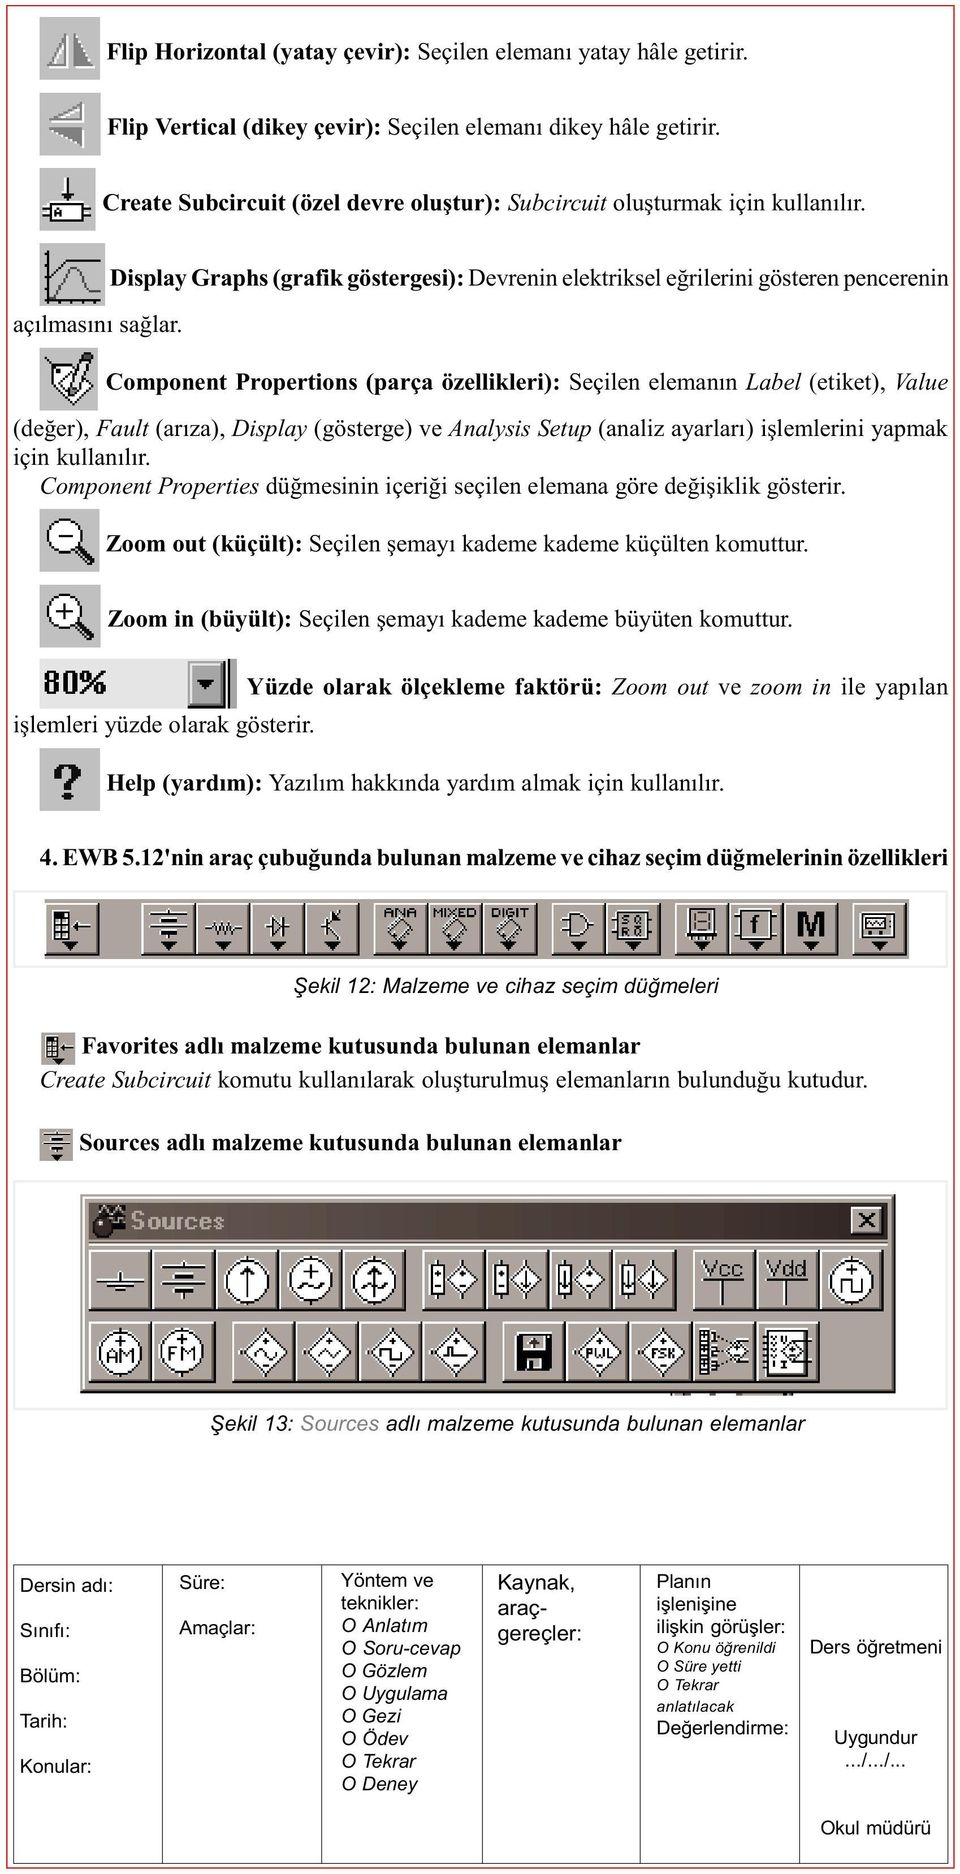 Display Graphs (grafik göstergesi): Devrenin elektriksel eðrilerini gösteren pencerenin Component Propertions (parça özellikleri): Seçilen elemanýn Label (etiket), Value (deðer), Fault (arýza),